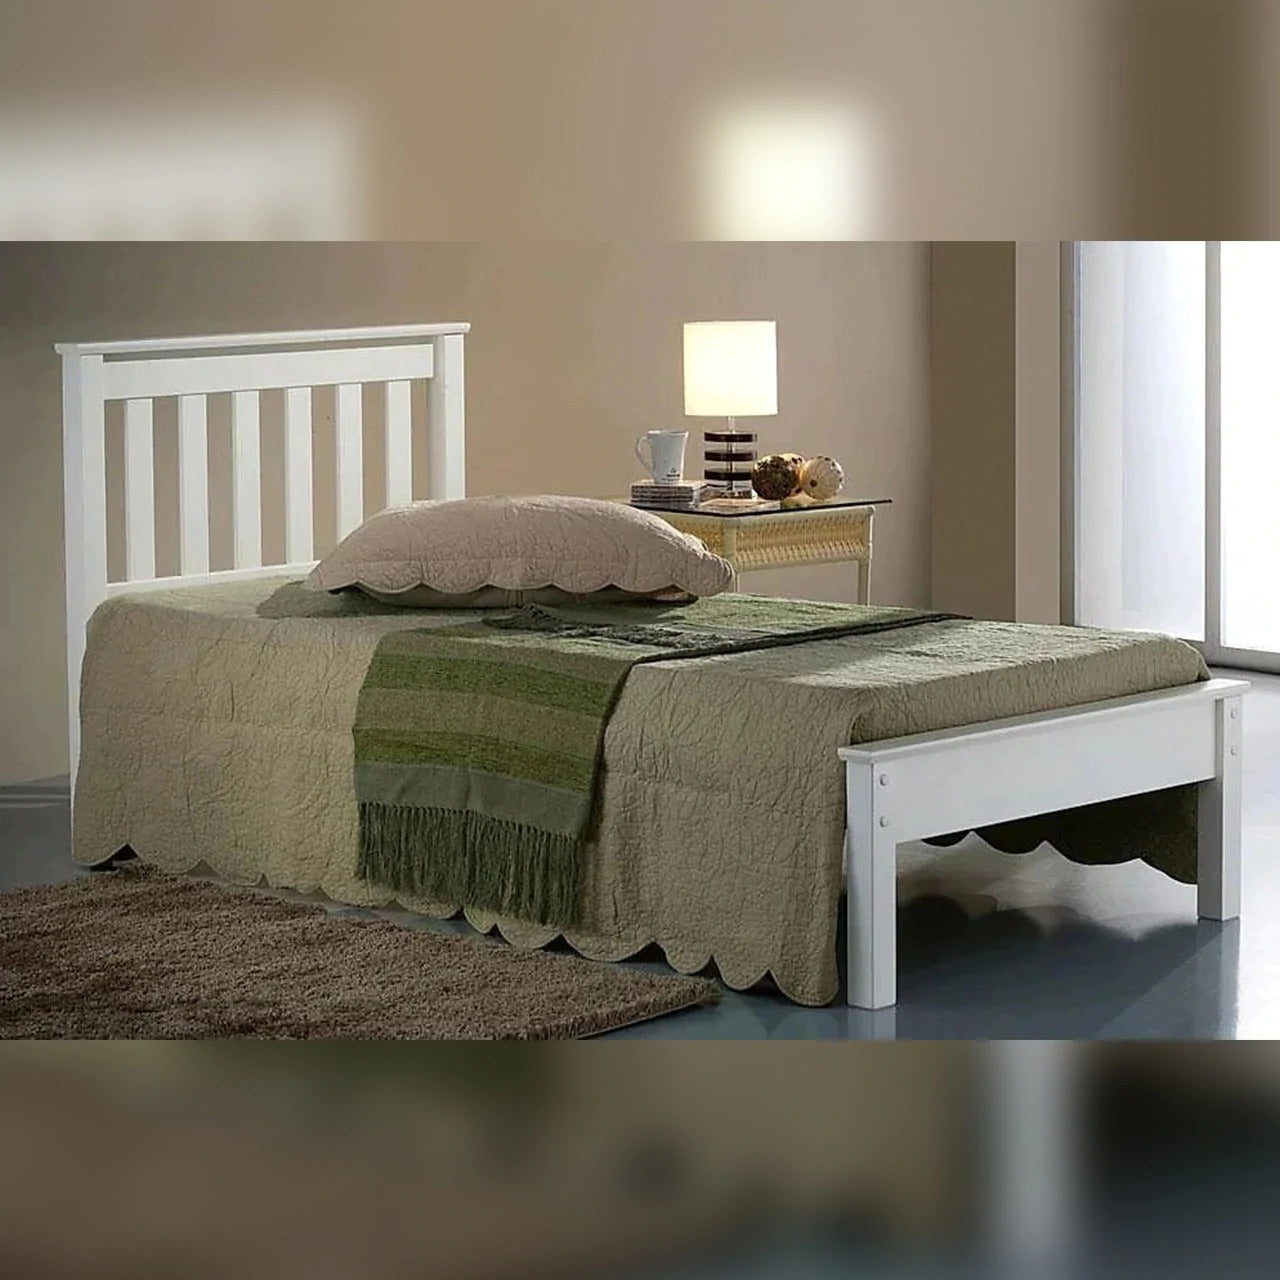 Single Bed Design, Single Diwan Bed Design, Modern Single Bed Design, Single Bed Designs With Box